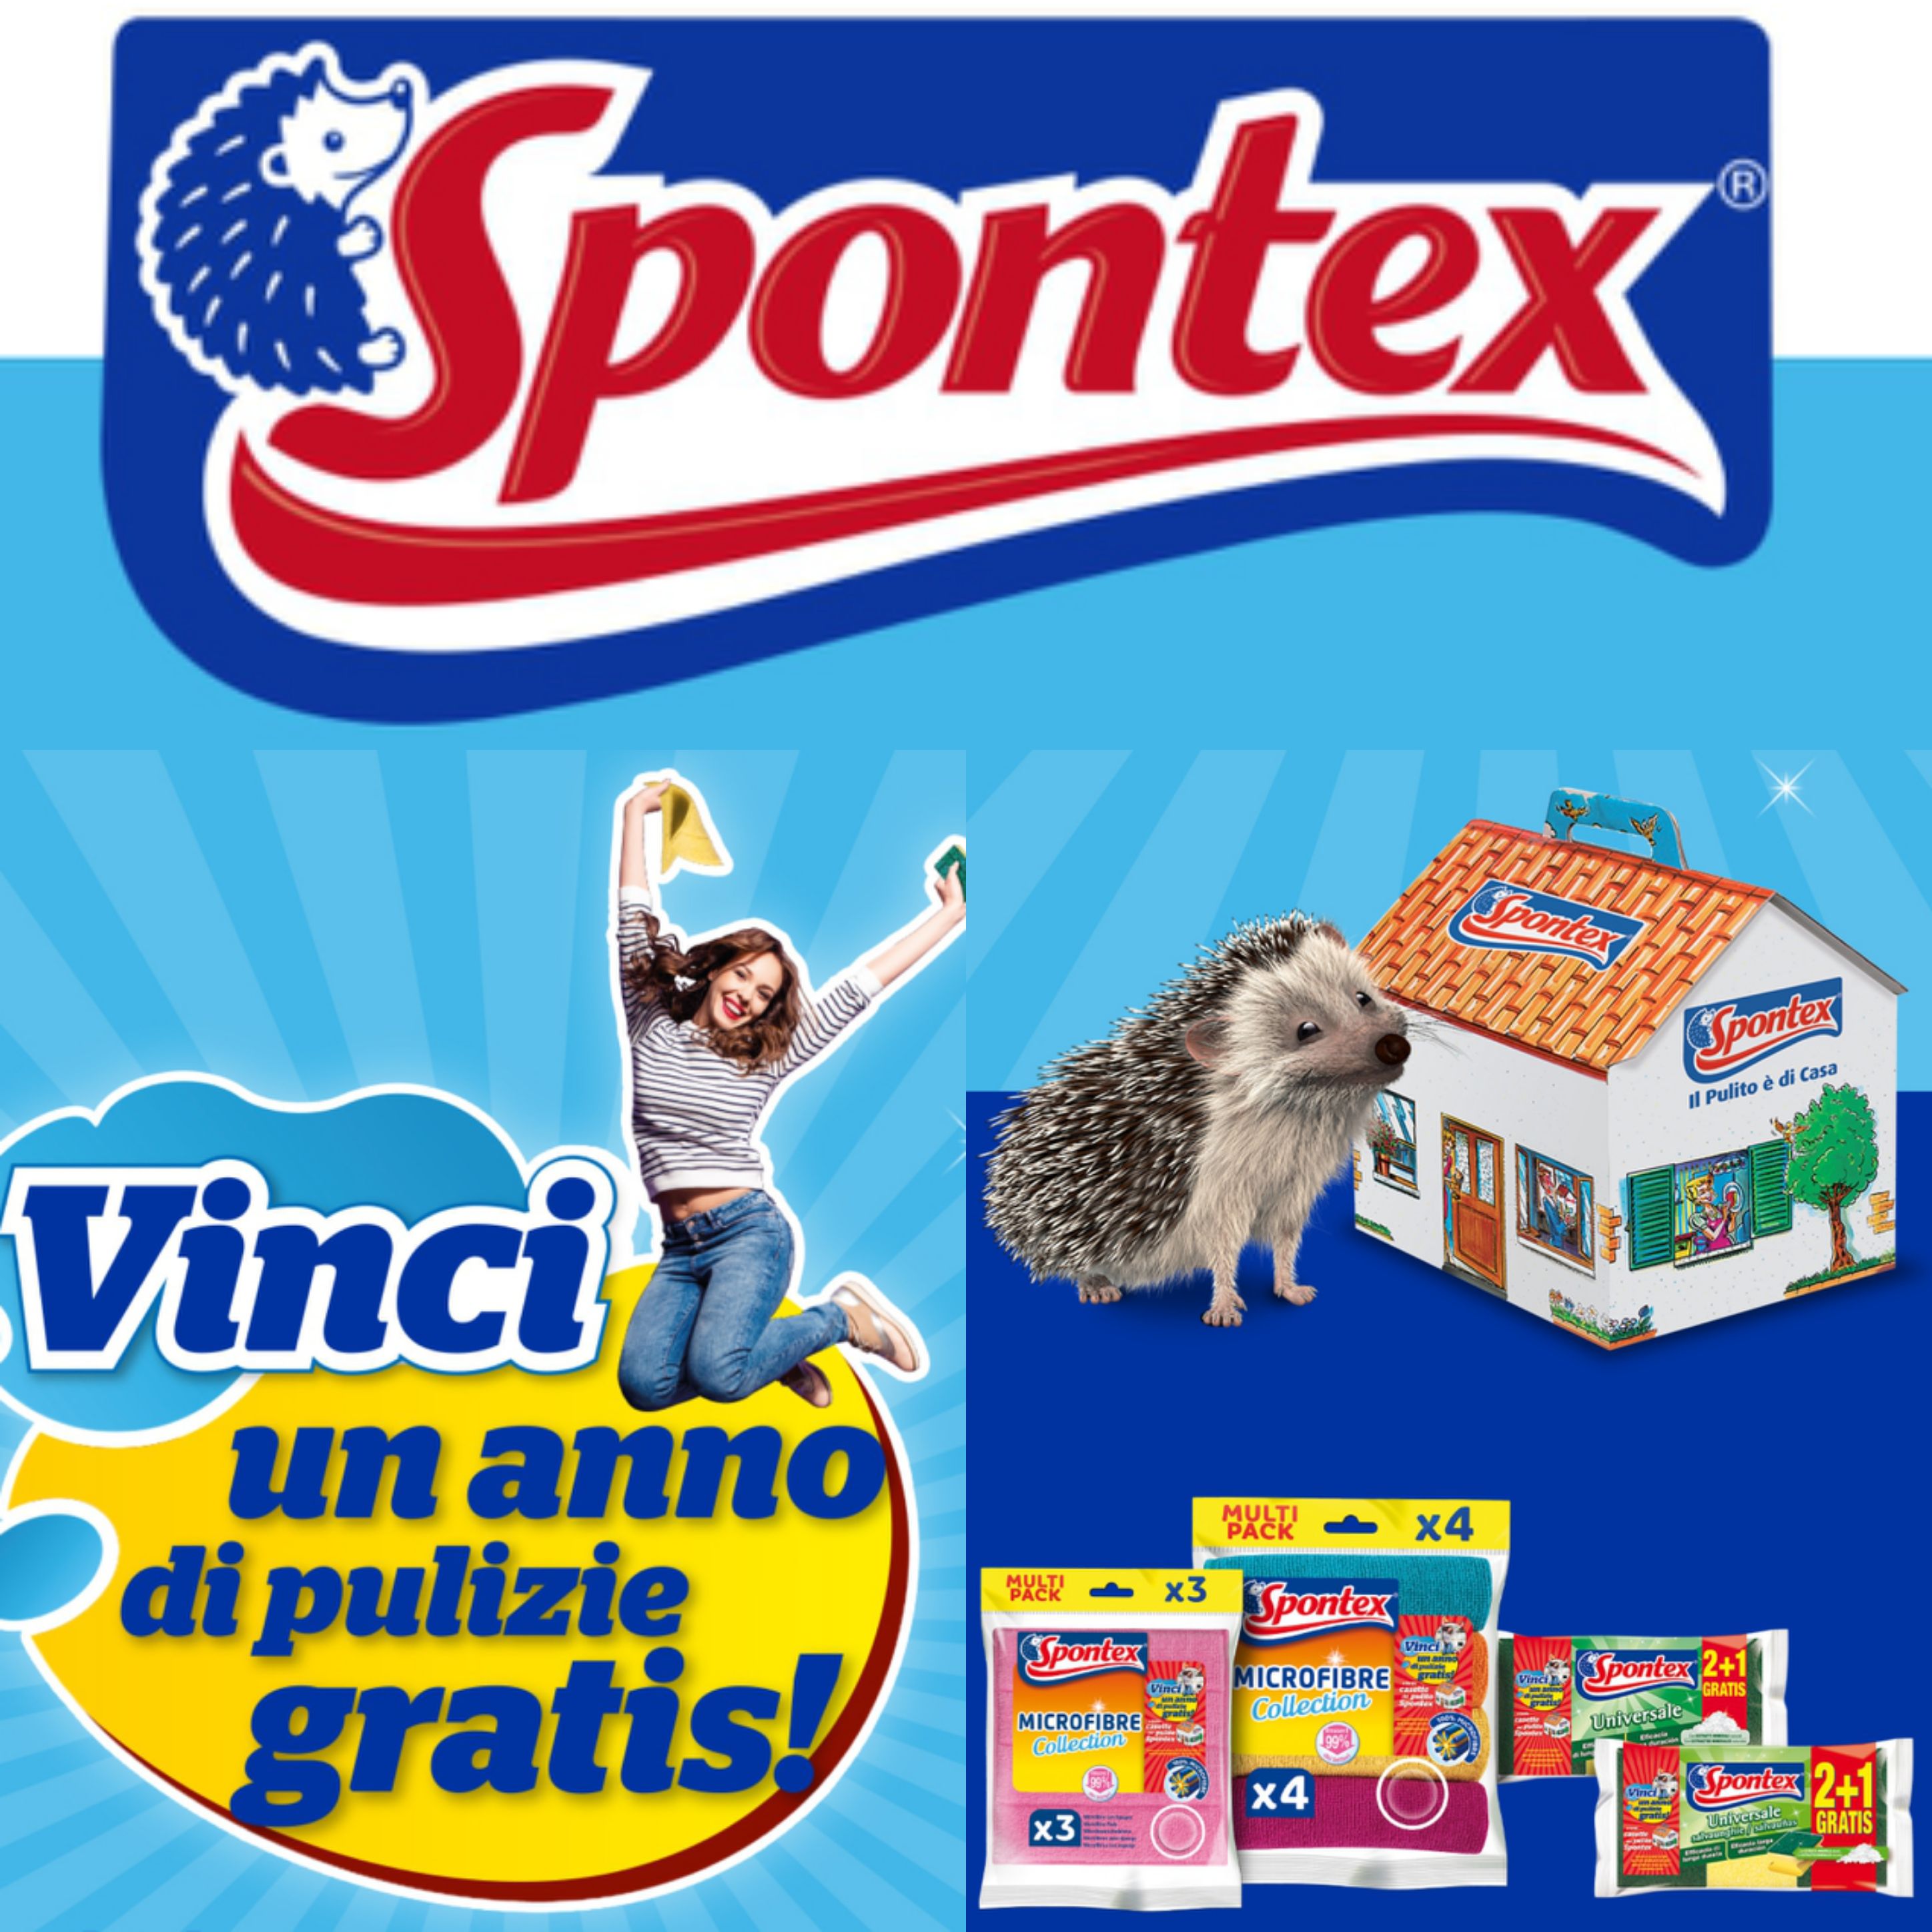 SPONTEX “VINCI UN ANNO DI PULIZIE GRATIS!”